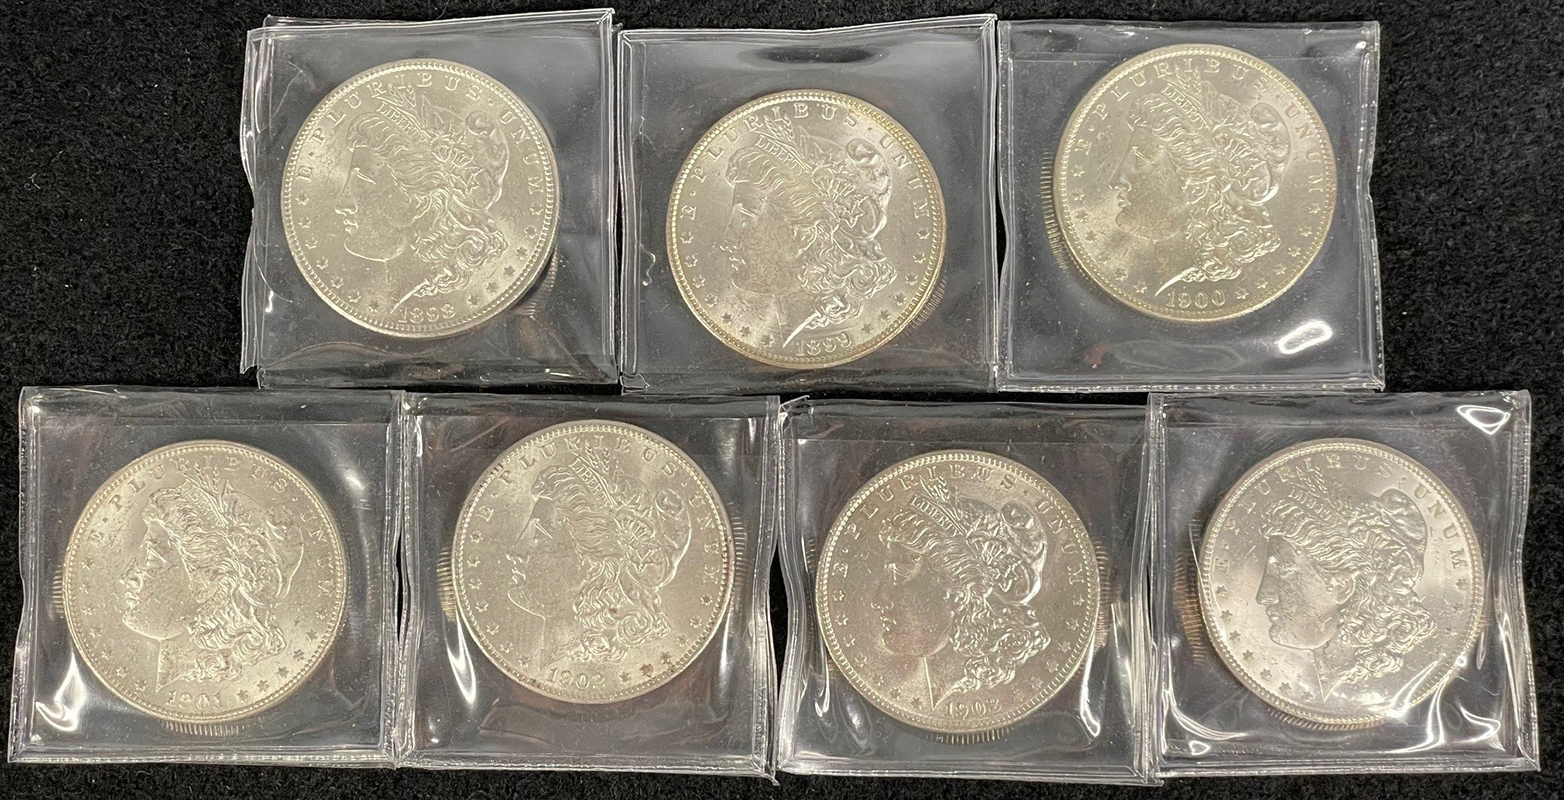 7-piece morgan dollar set obverse in BU condition. New Orleans mint mark